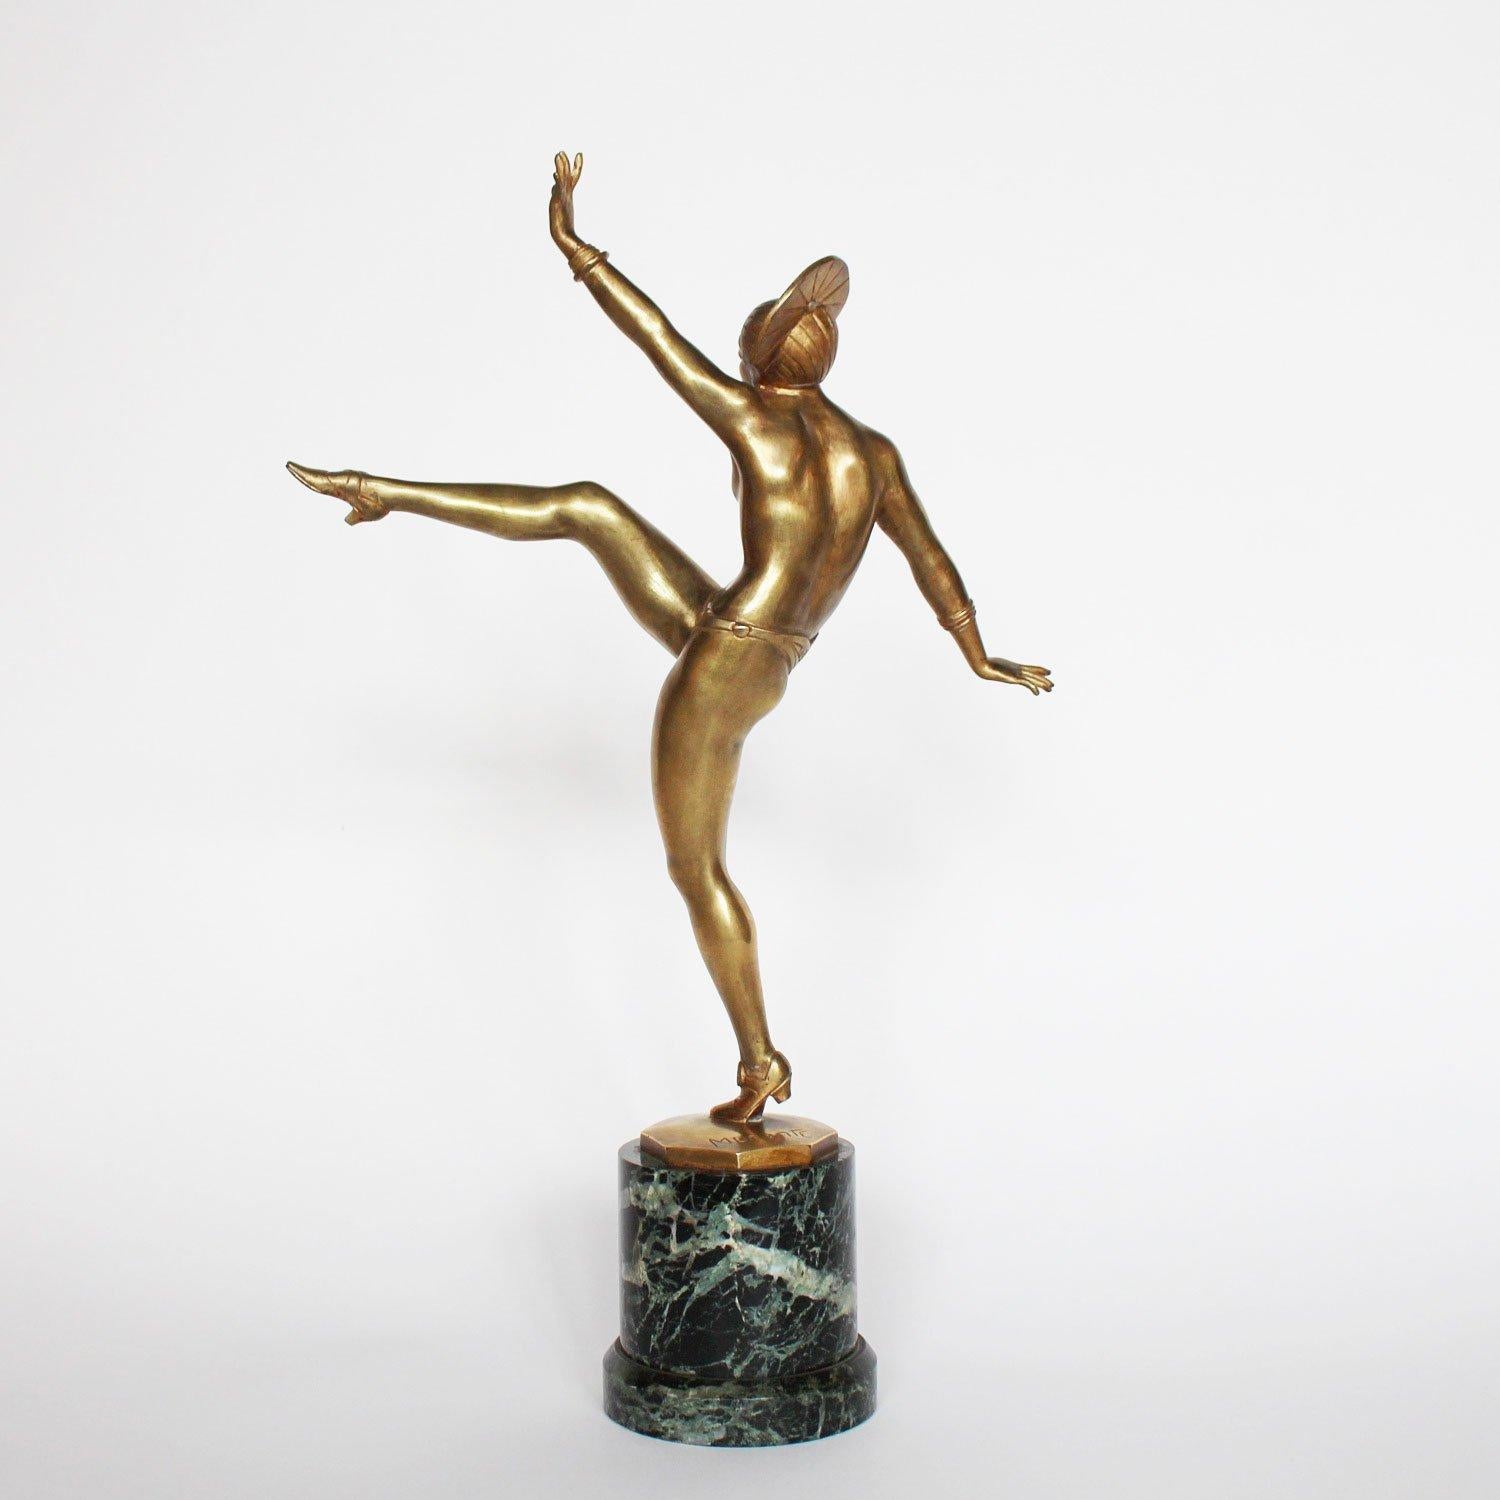 Early 20th Century JP Morante 'High Kick' Bronze Sculpture Signed Morante, French, circa 1925